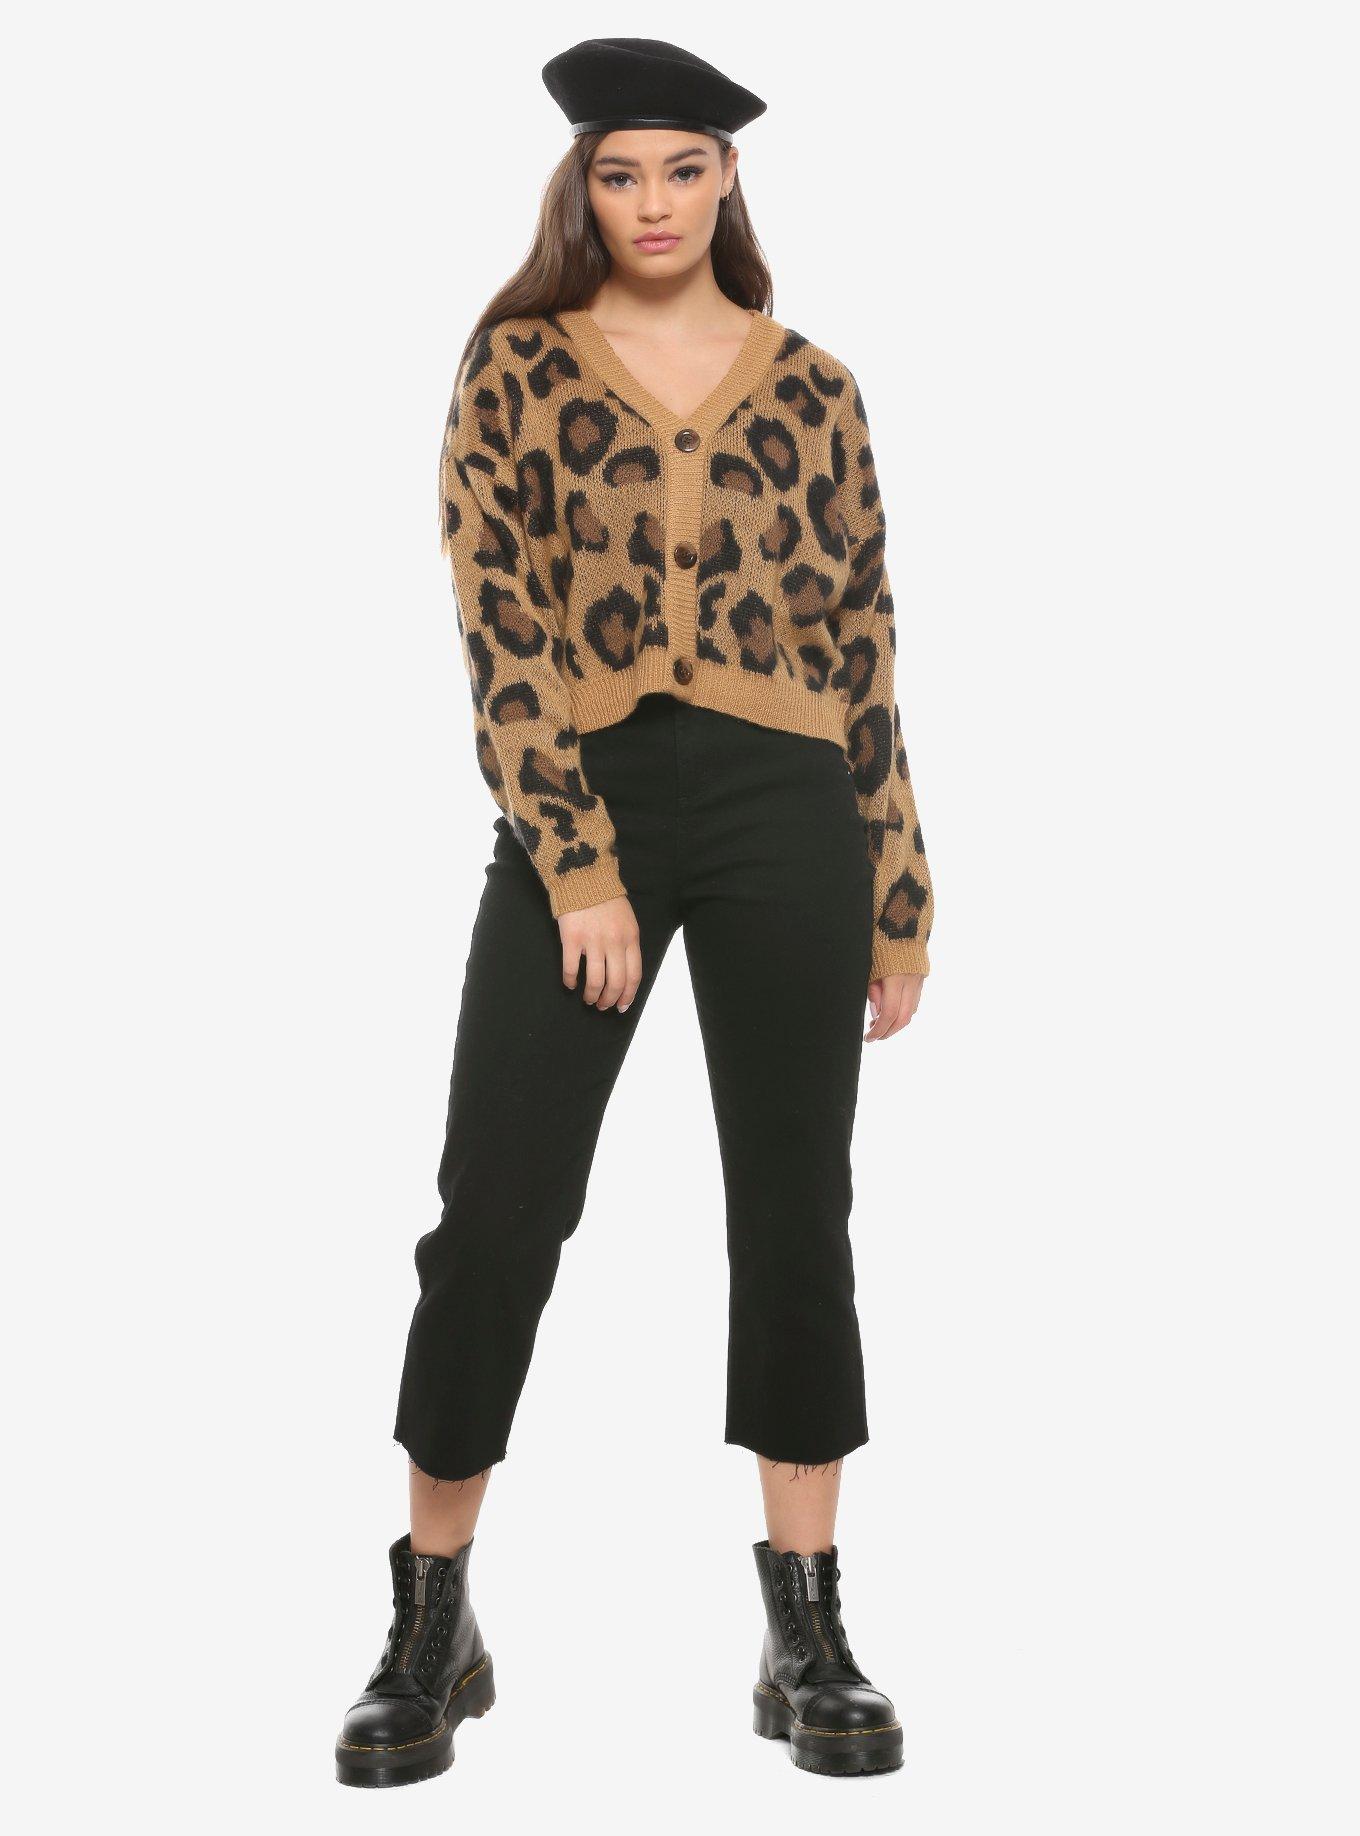 Leopard Print Girls Crop Cardigan, LEOPARD, alternate